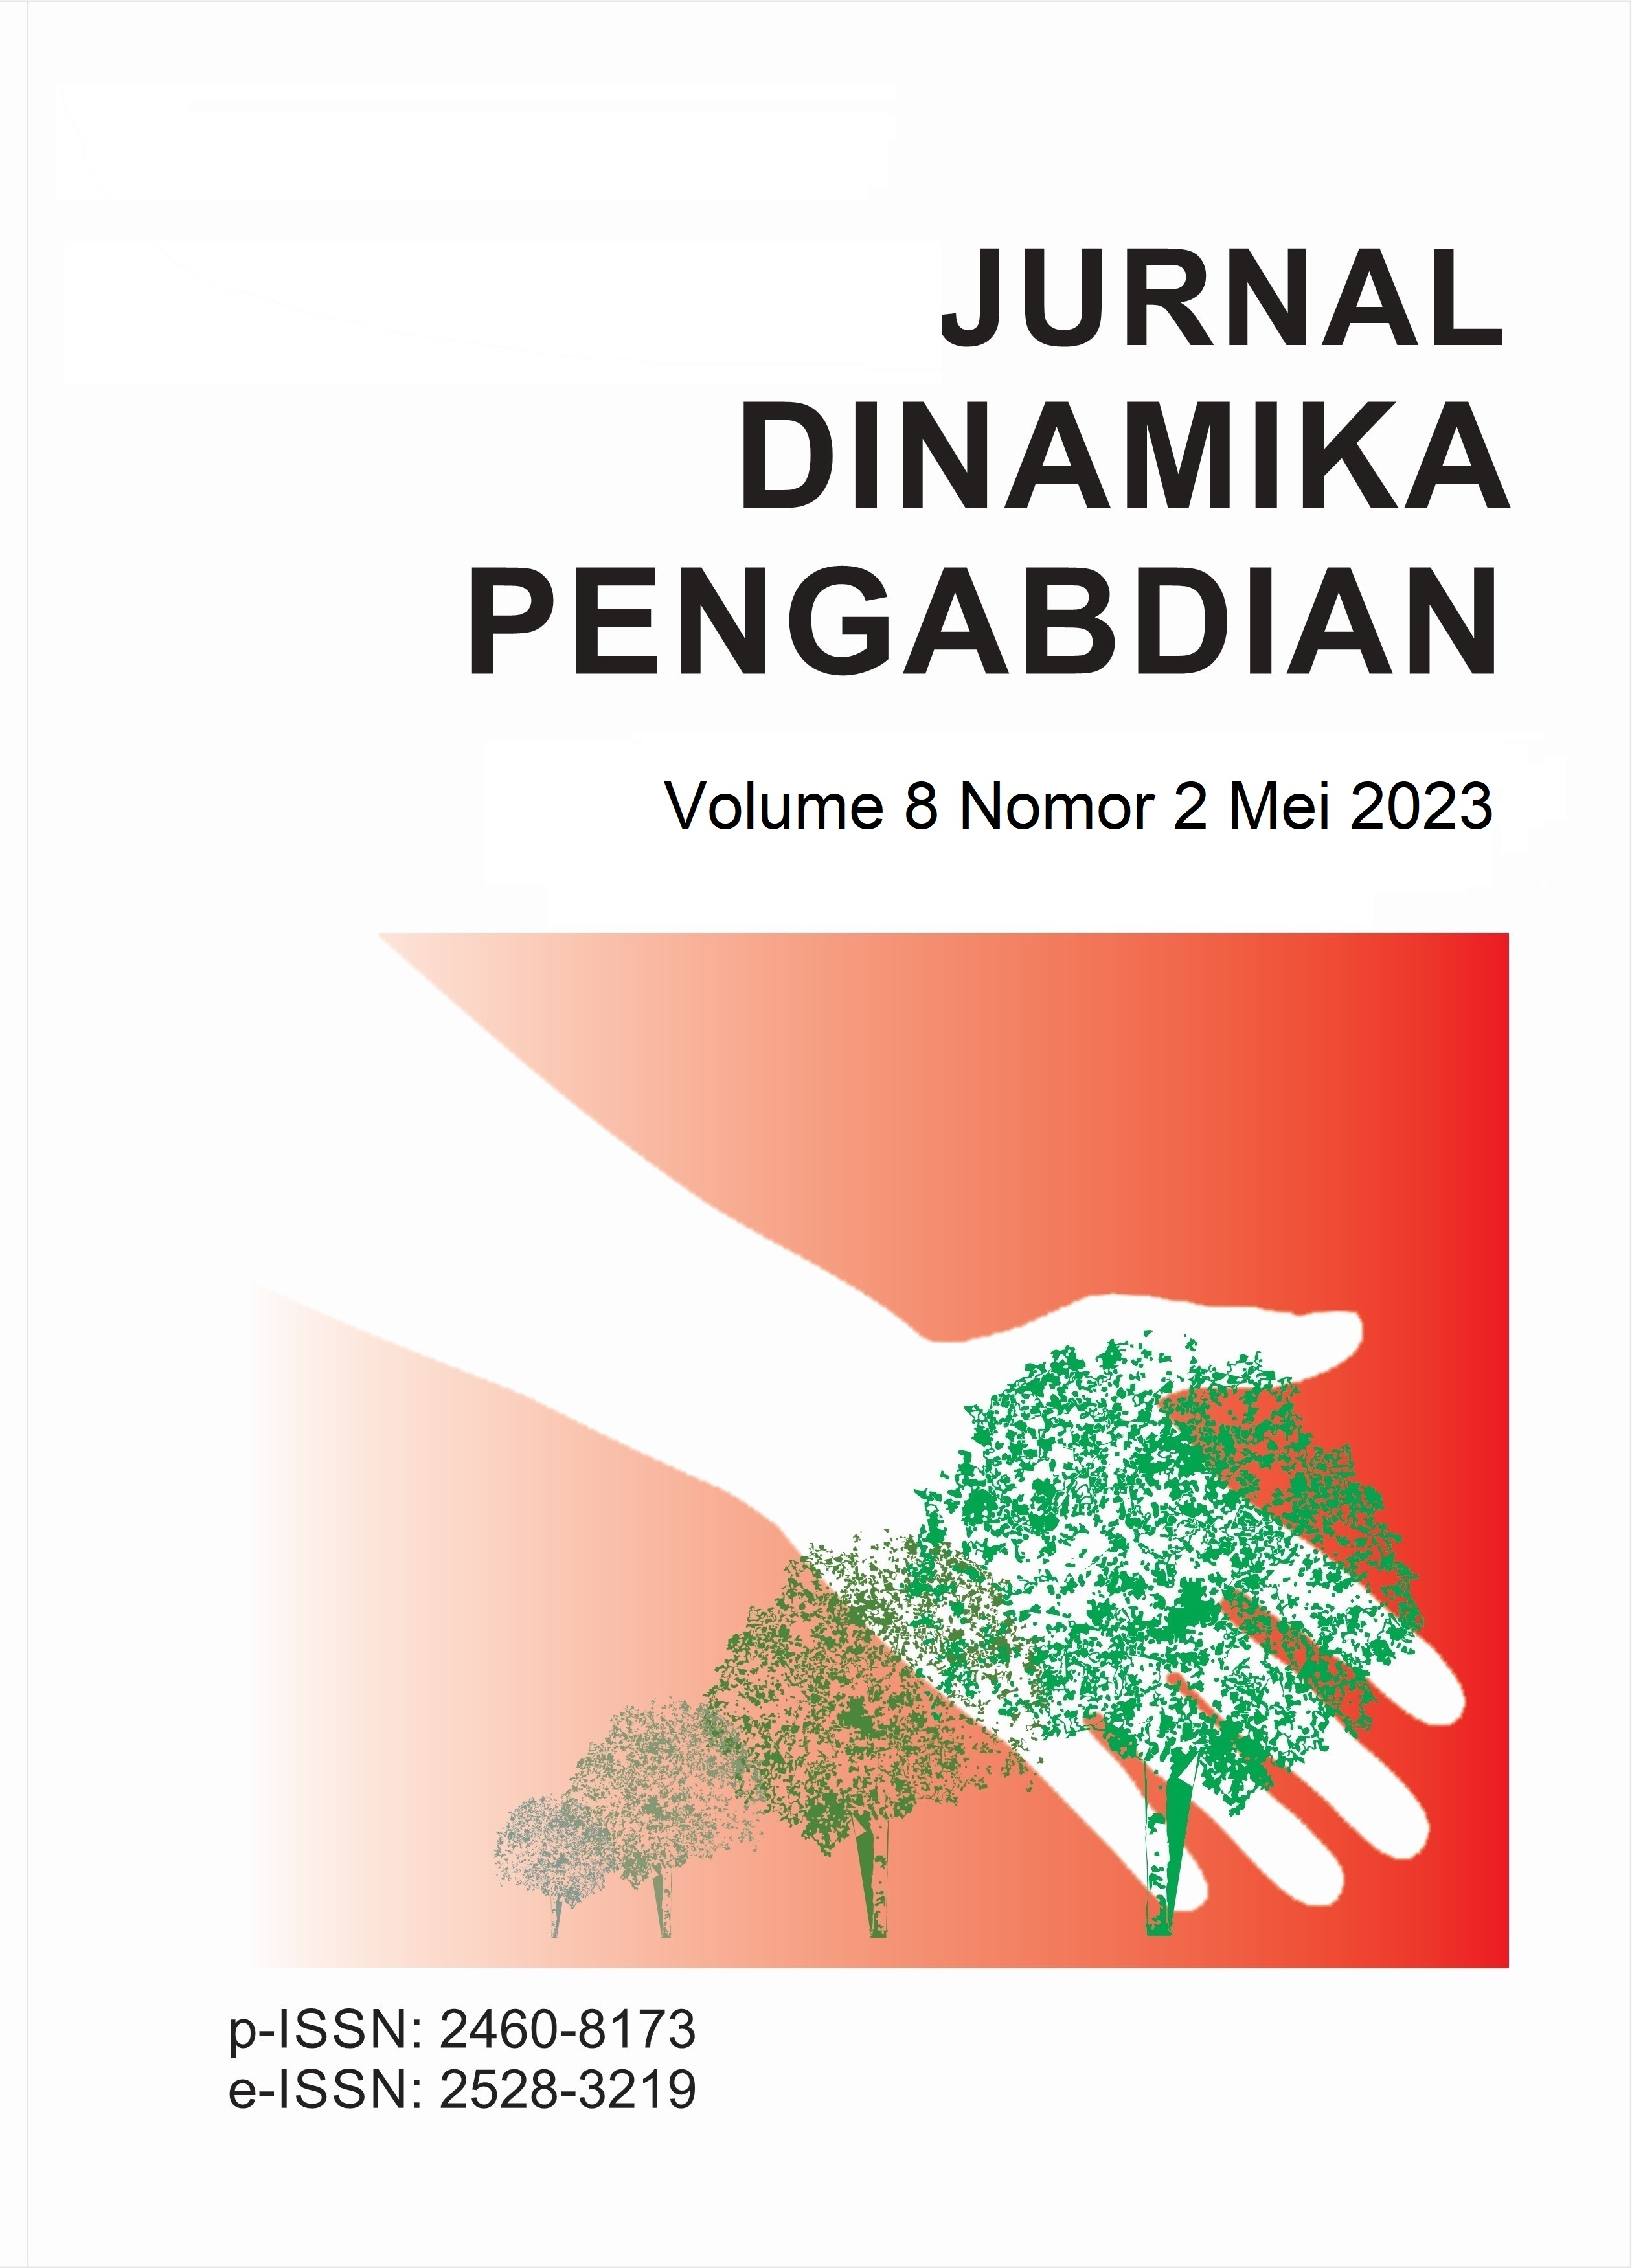 					View Vol. 8 No. 2 (2023): JURNAL DINAMIKA PENGABDIAN VOL. 8 NO. 2 MEI 2023
				